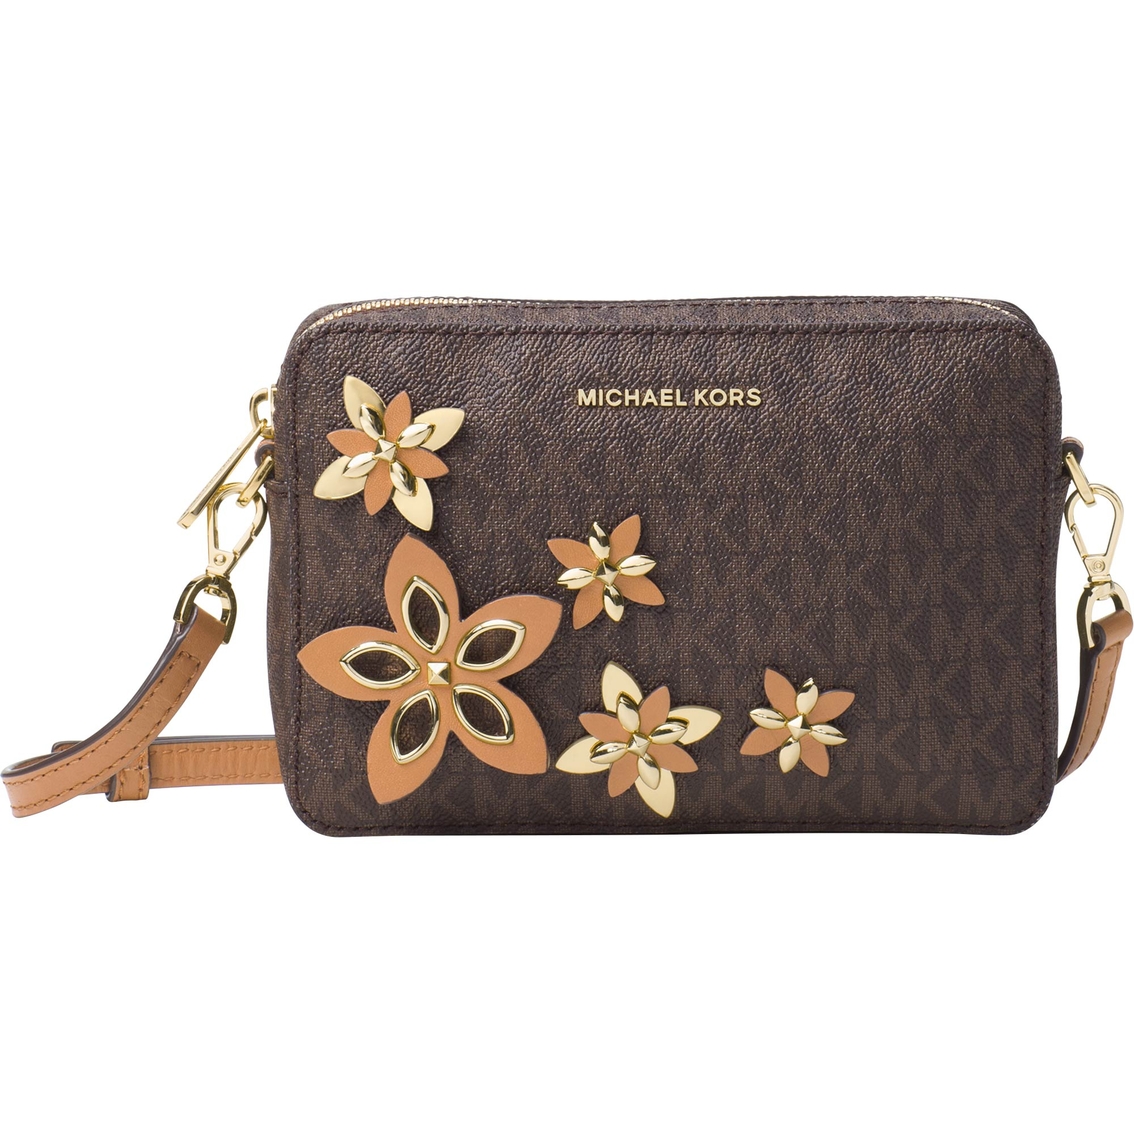 michael kors flower handbag